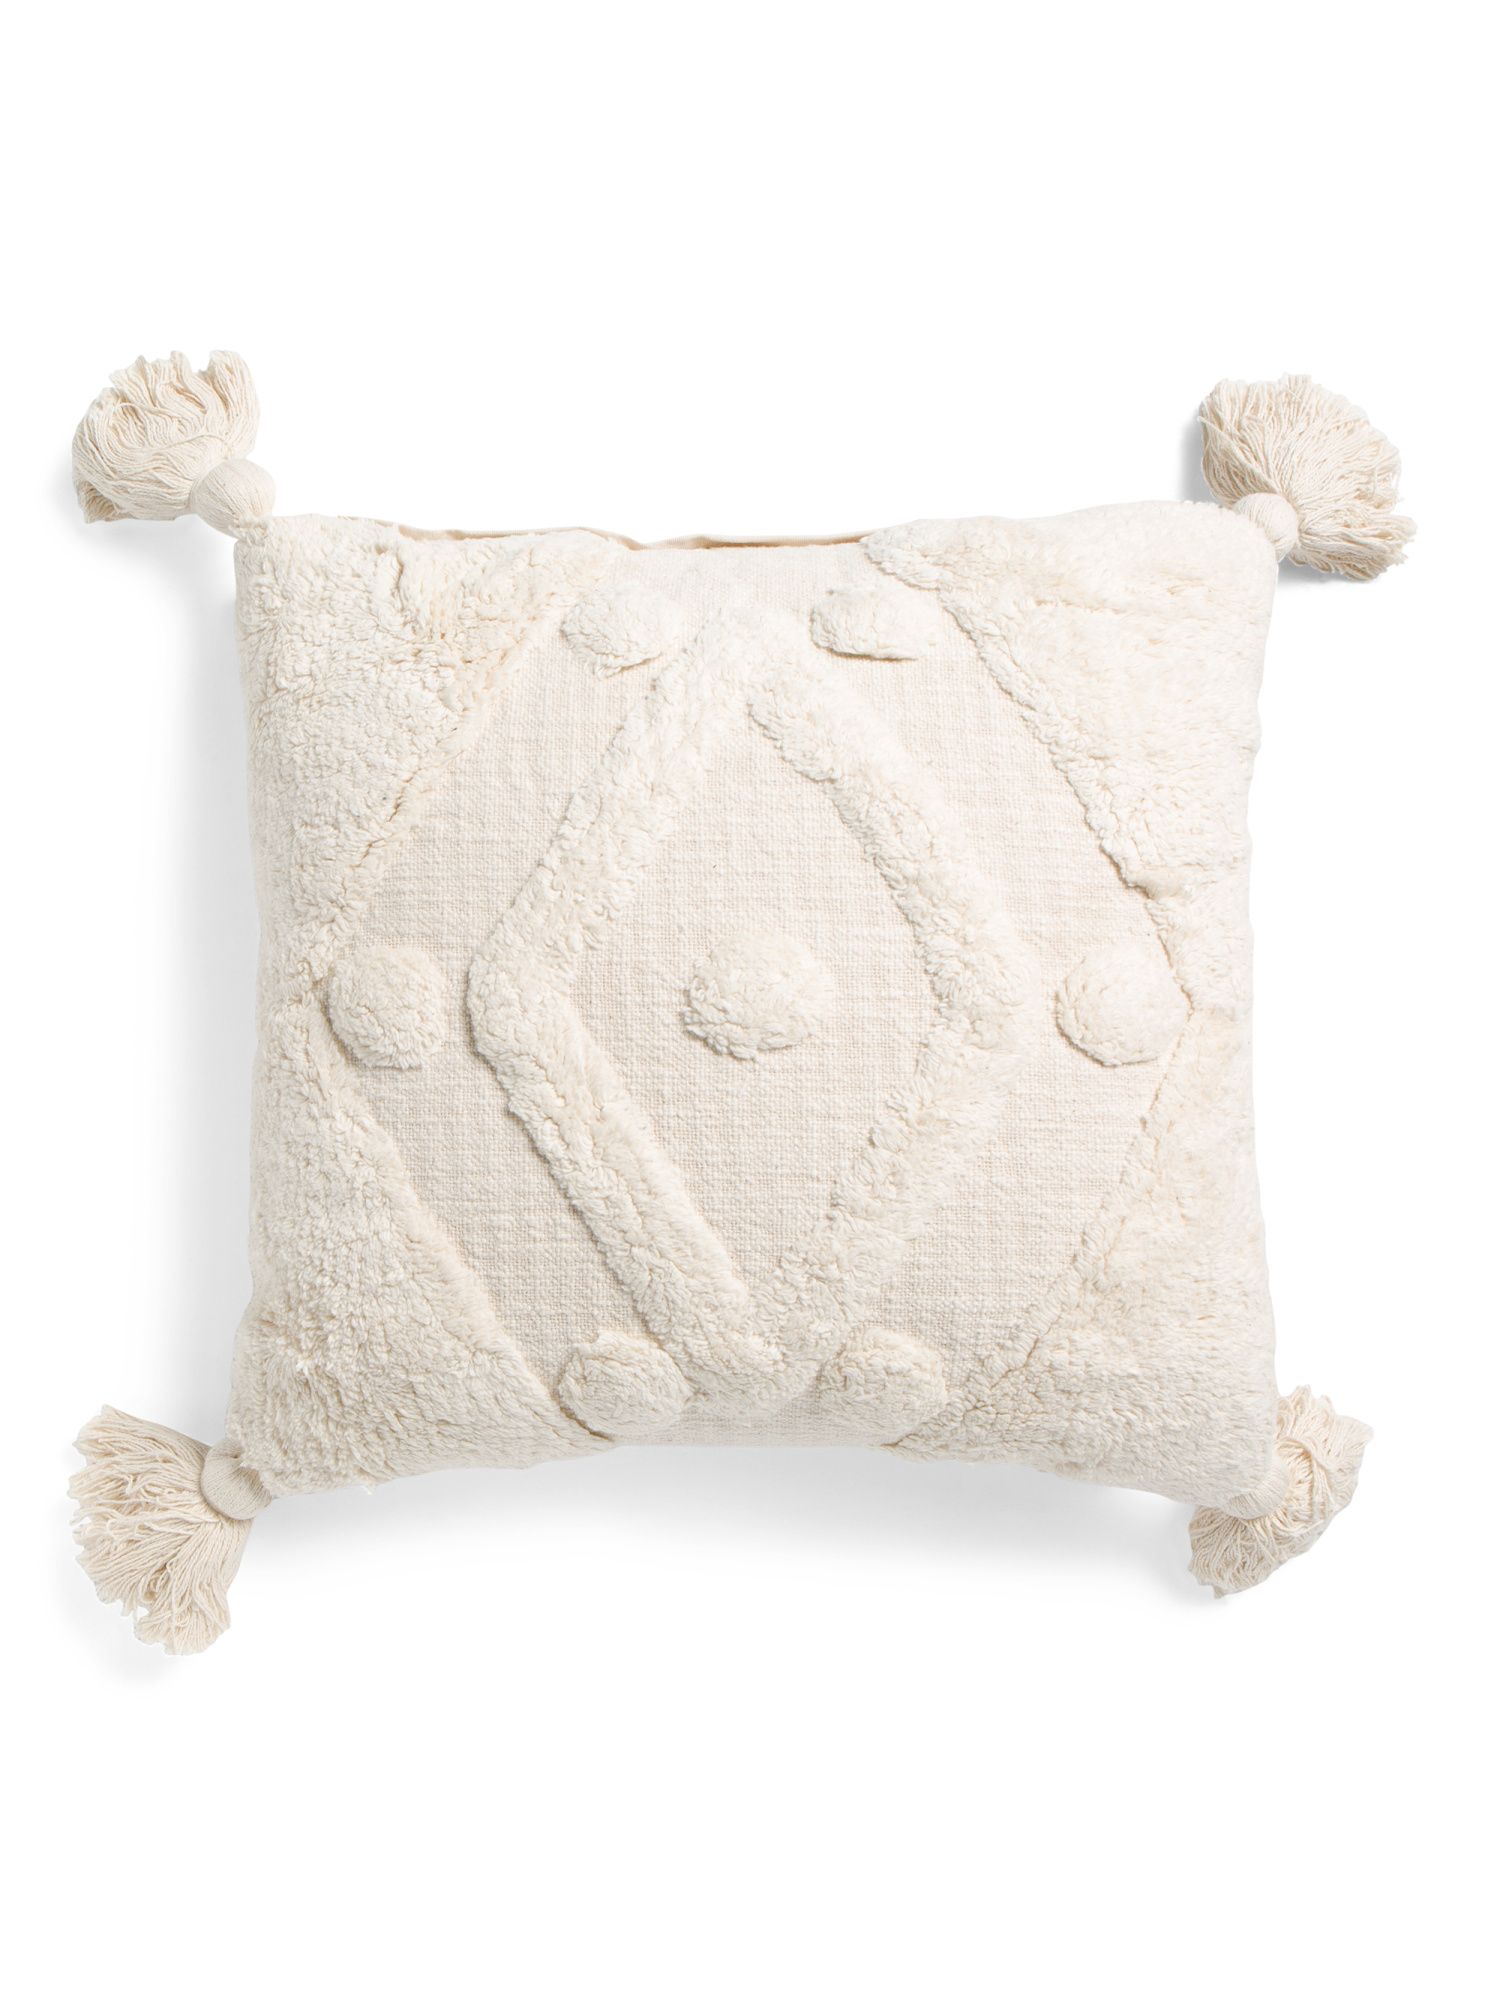 20x20 Overtufted Pillow With Tassels | TJ Maxx